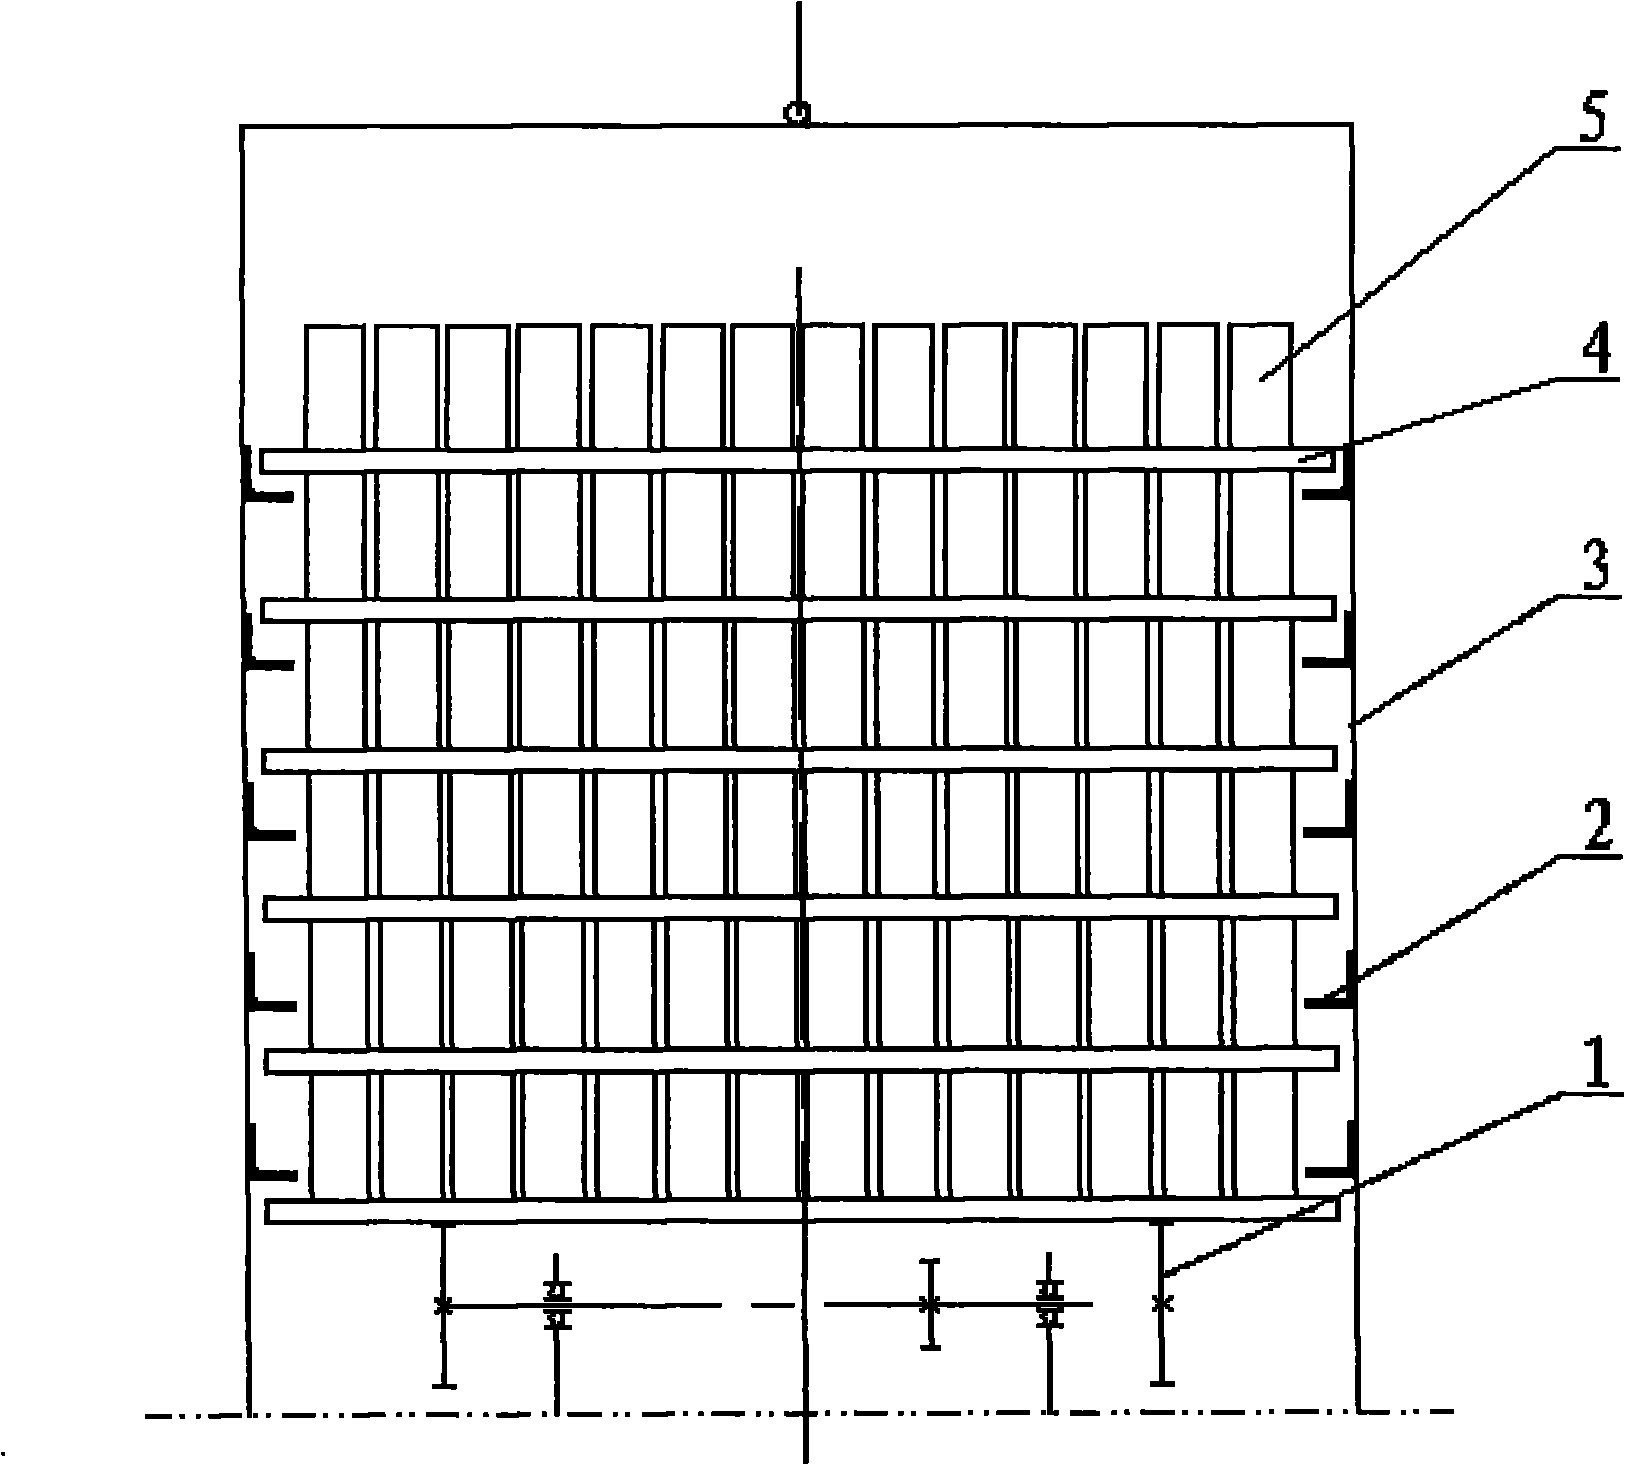 Automatic production process for post production flow of concrete blocks